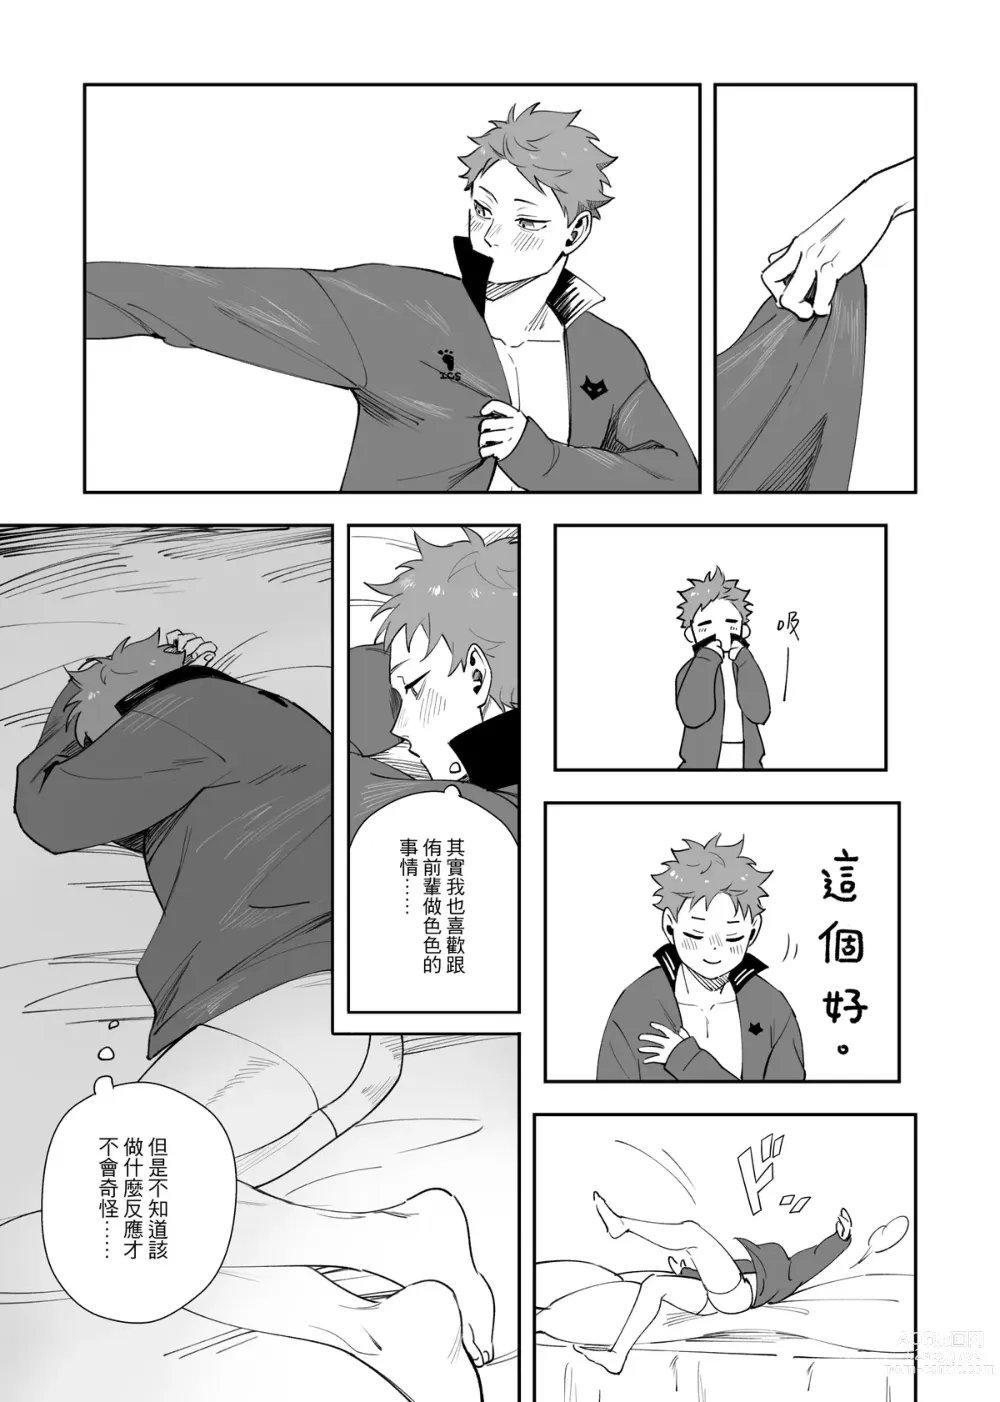 Page 8 of doujinshi 不好意思要請假三天三夜